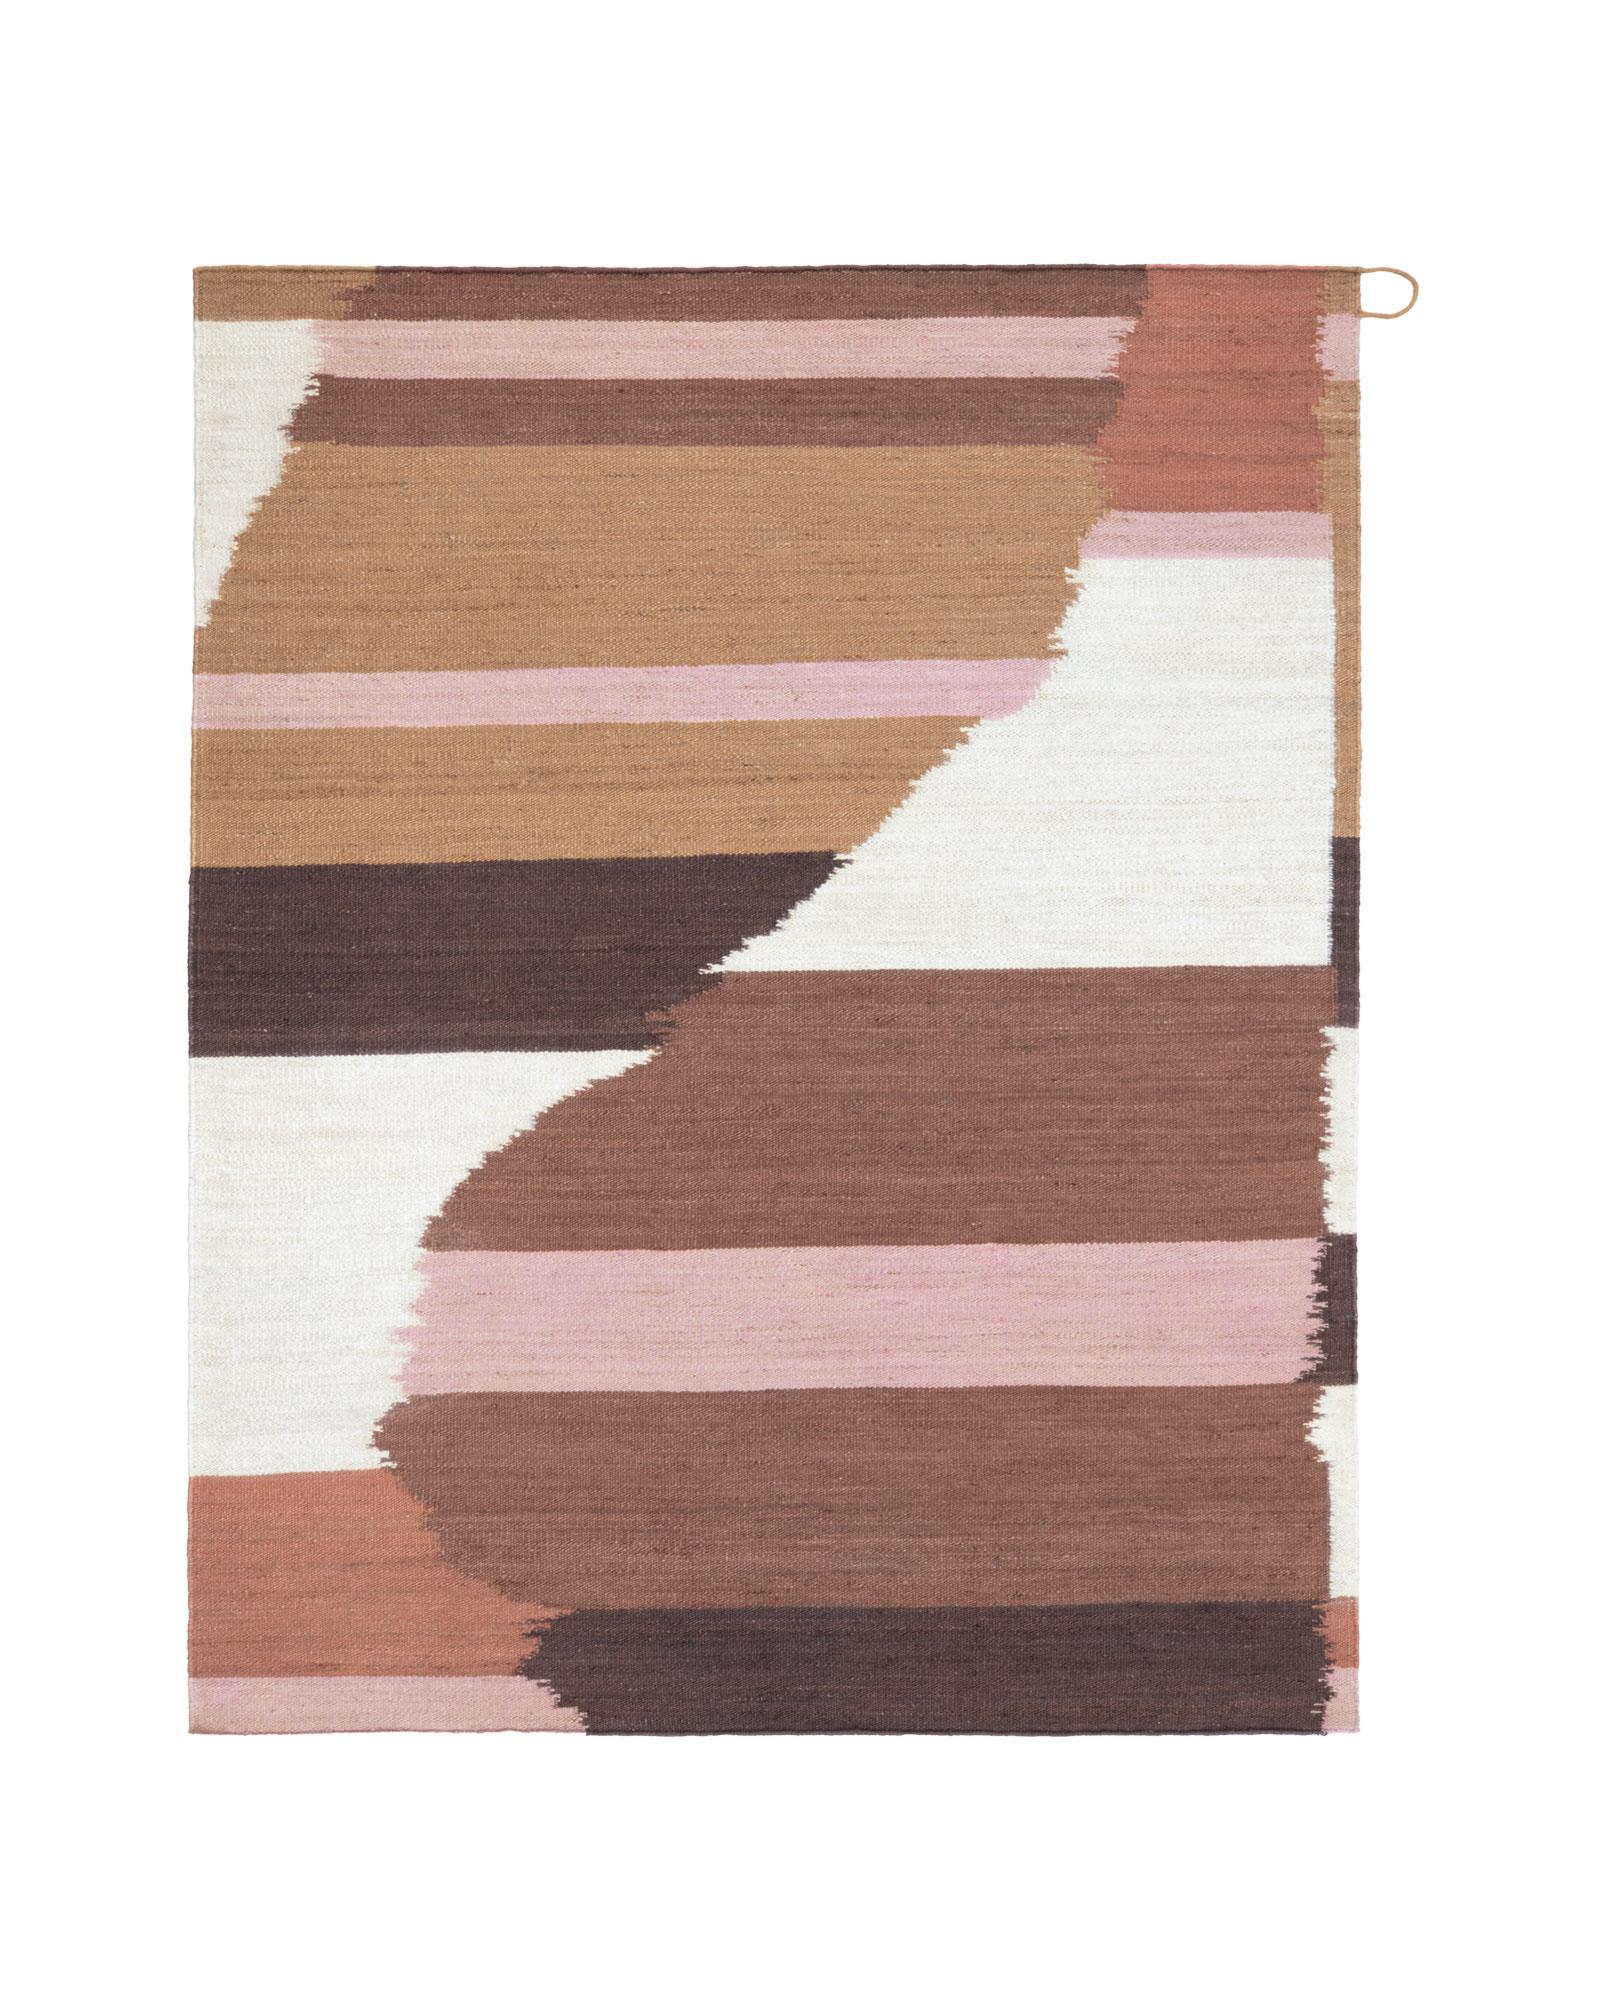 cc-tapis ONDA ONDA AREIA  handmade rug by Charles-Antoine Chappuis For Sale 1